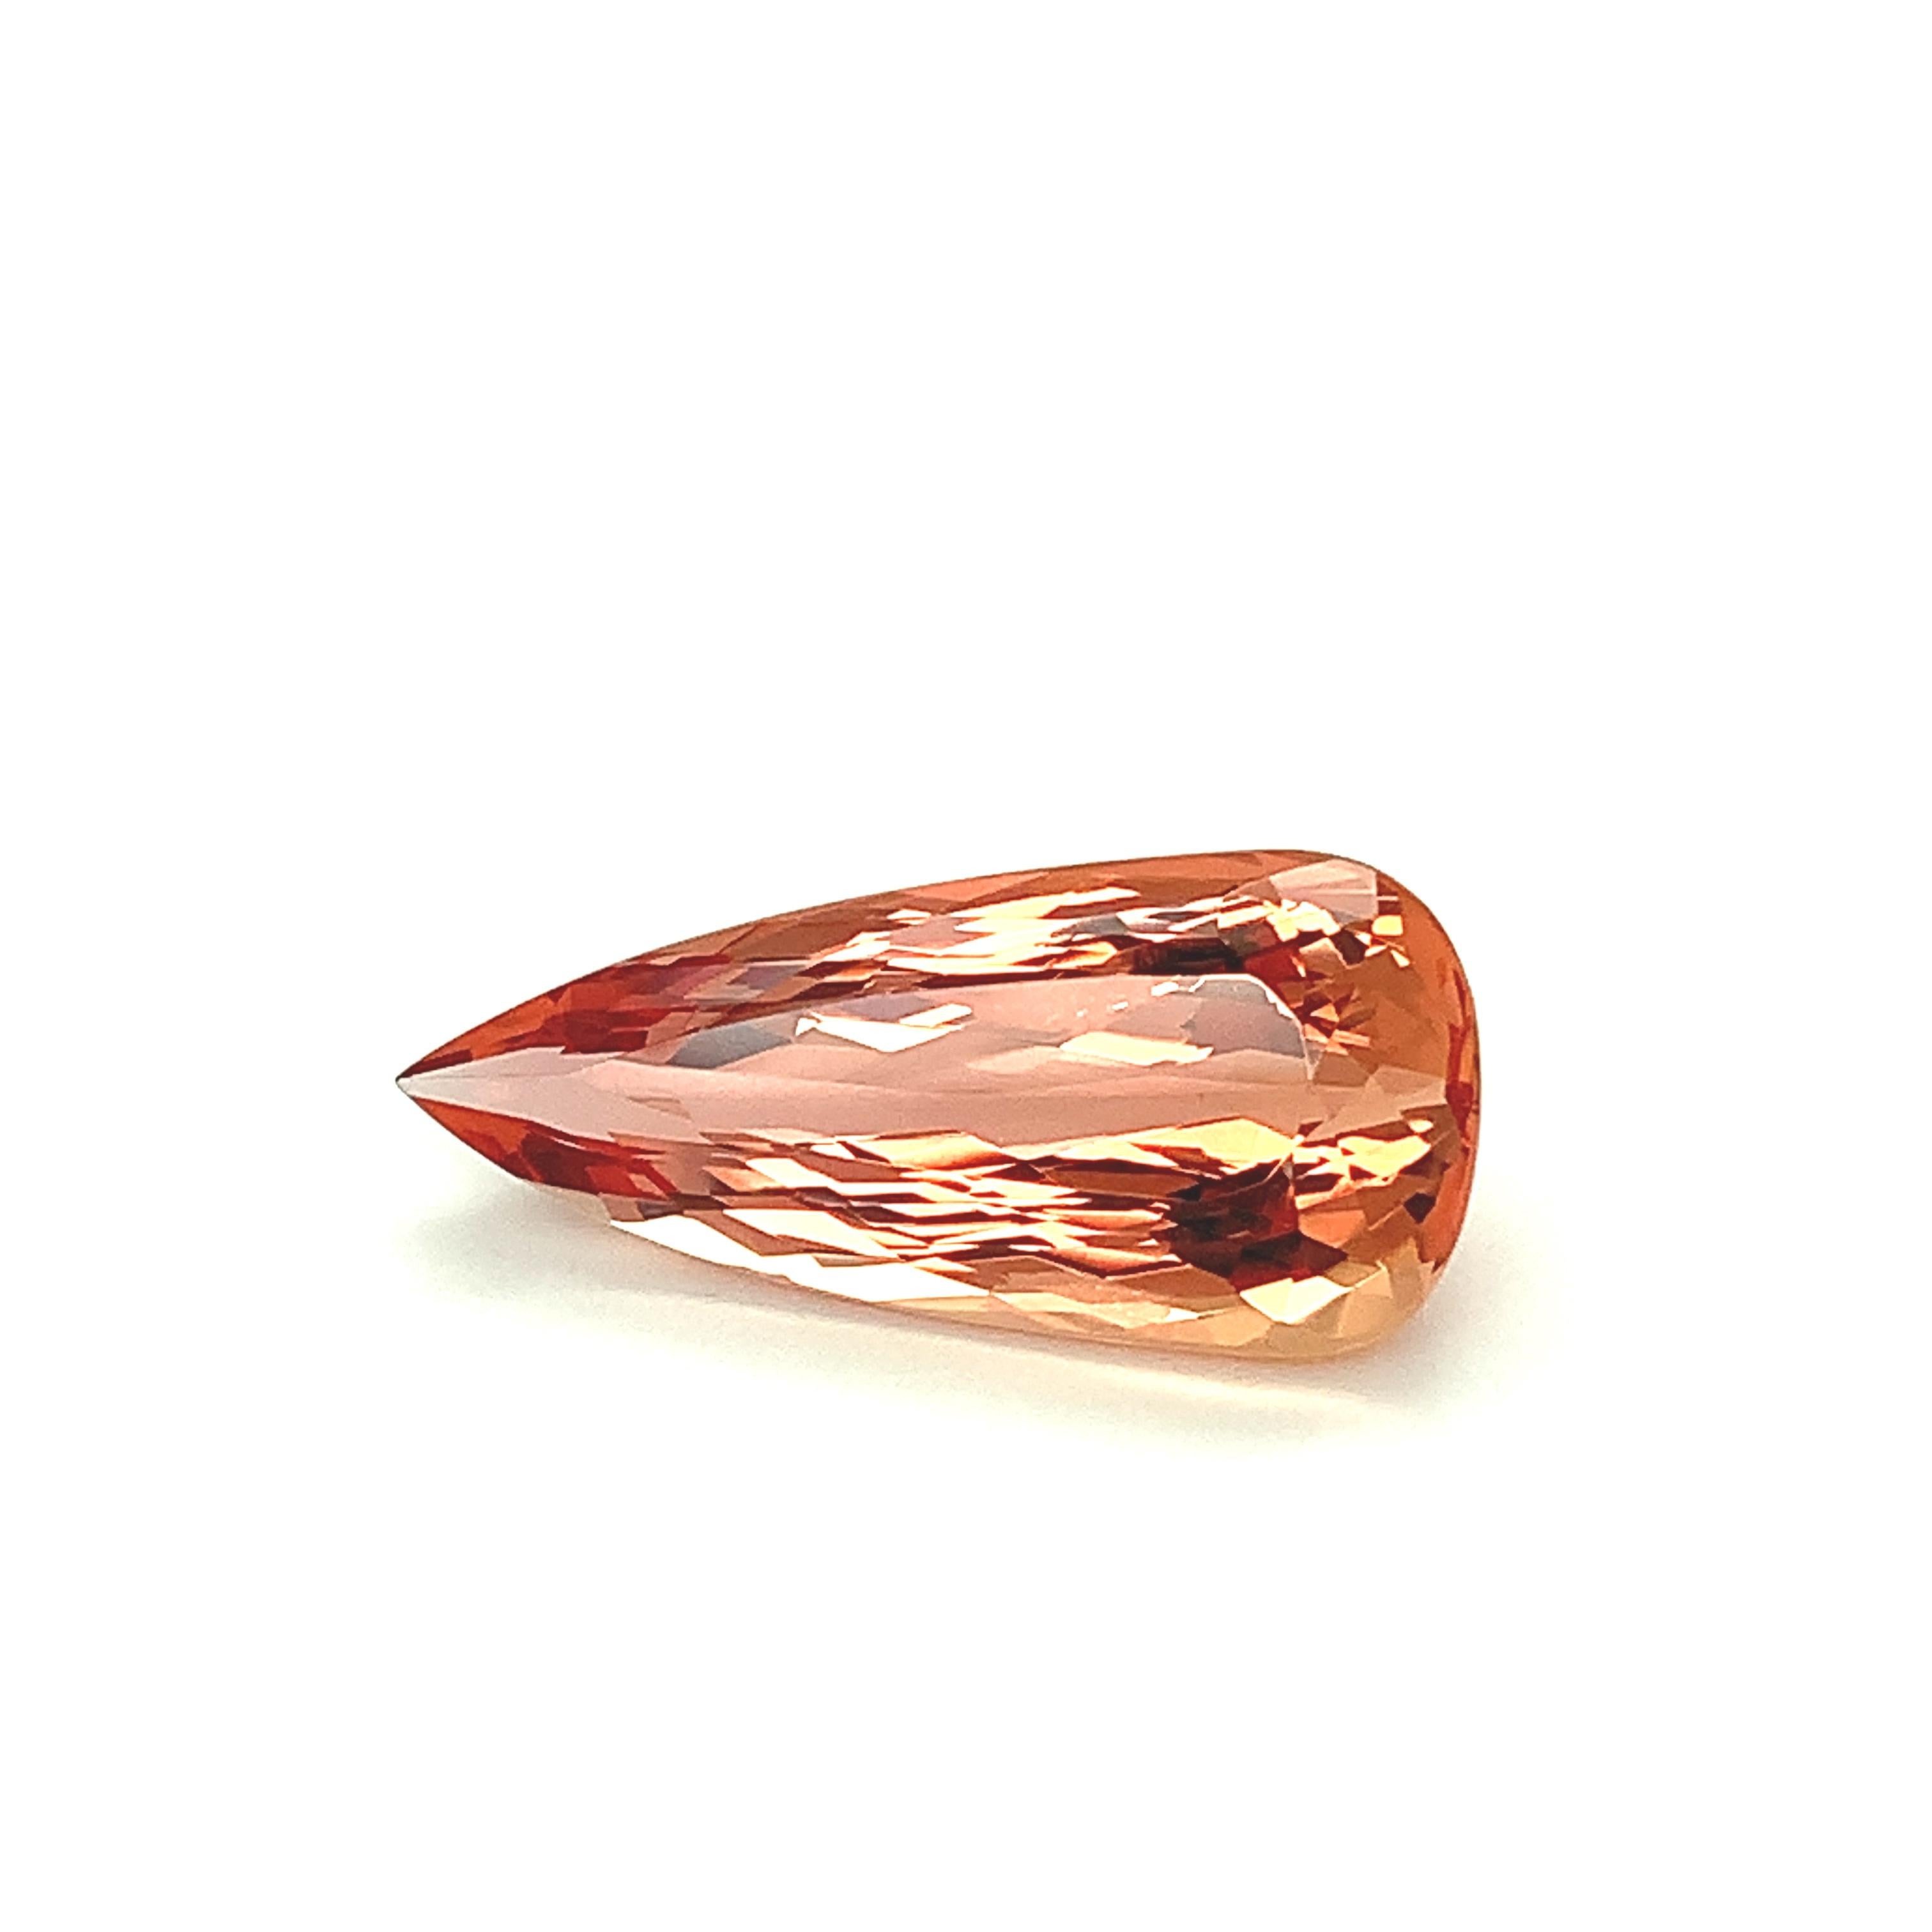 Topaze impériale orange 15,90 carats, pierre précieuse non sertie, certifiée GIA en vente 1